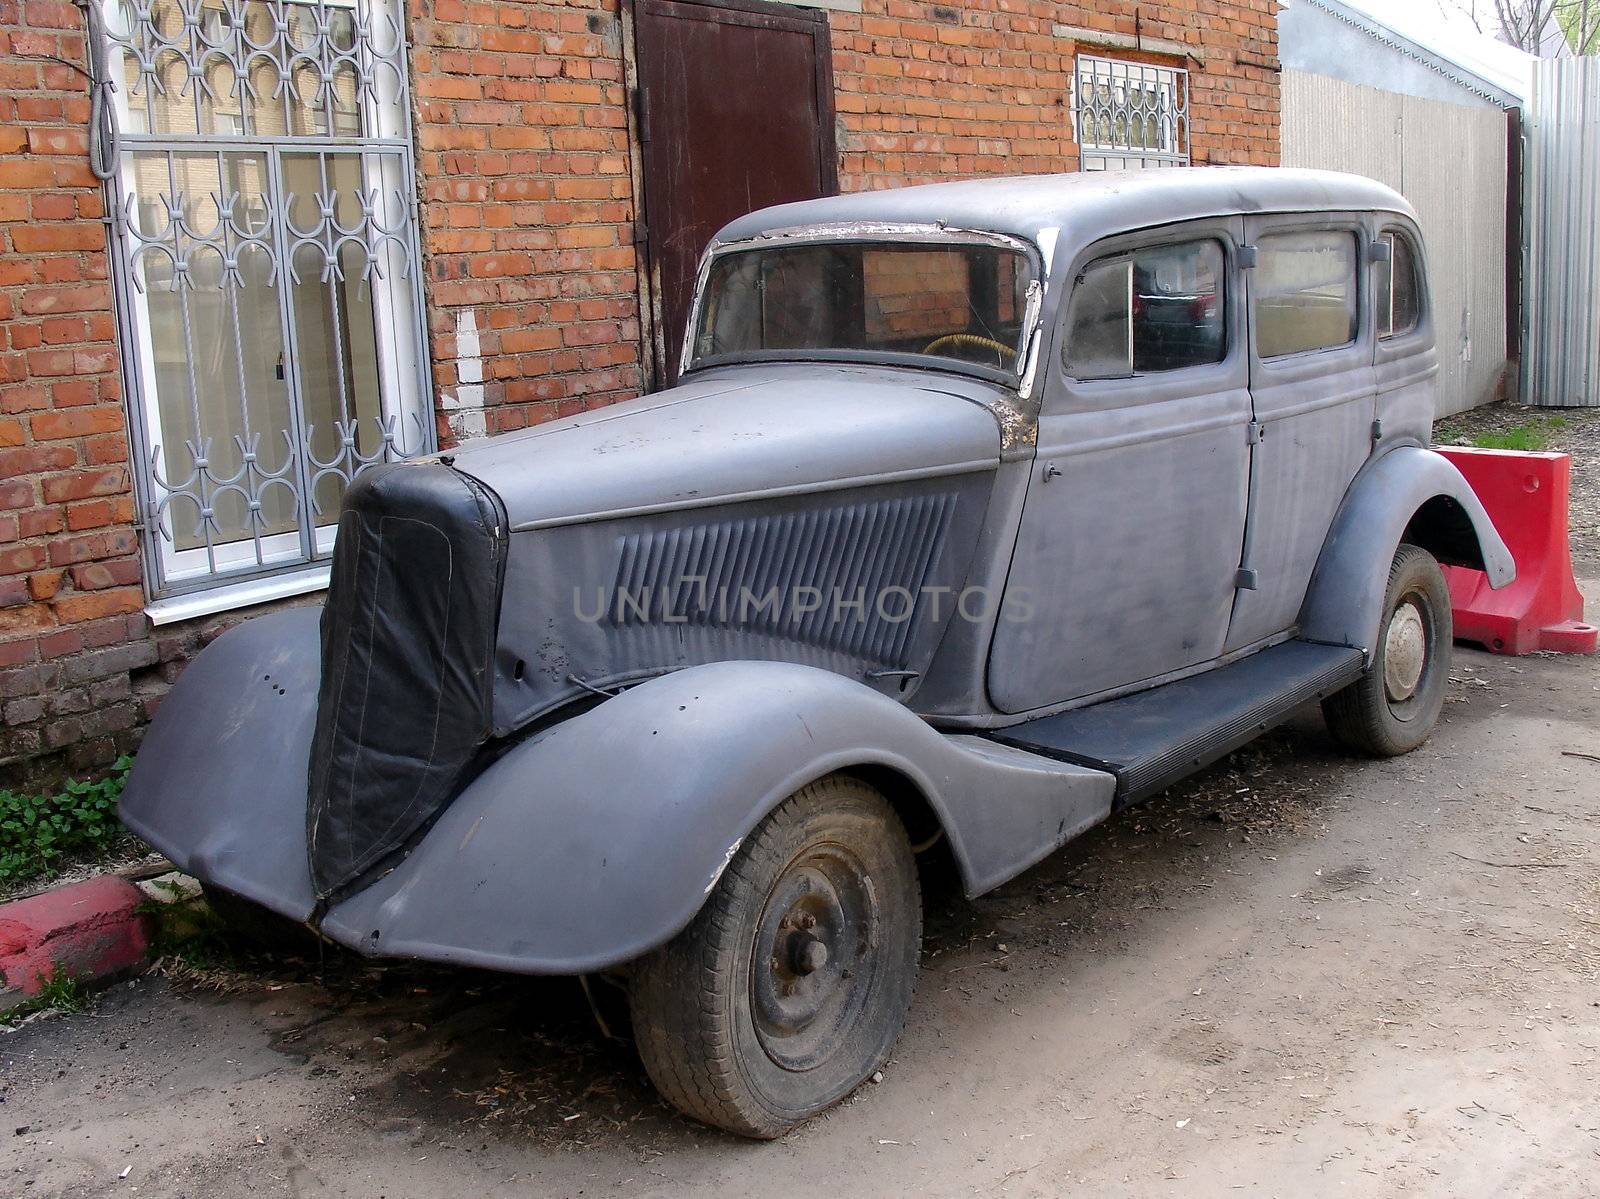 Vintage old German car on a brick wall background